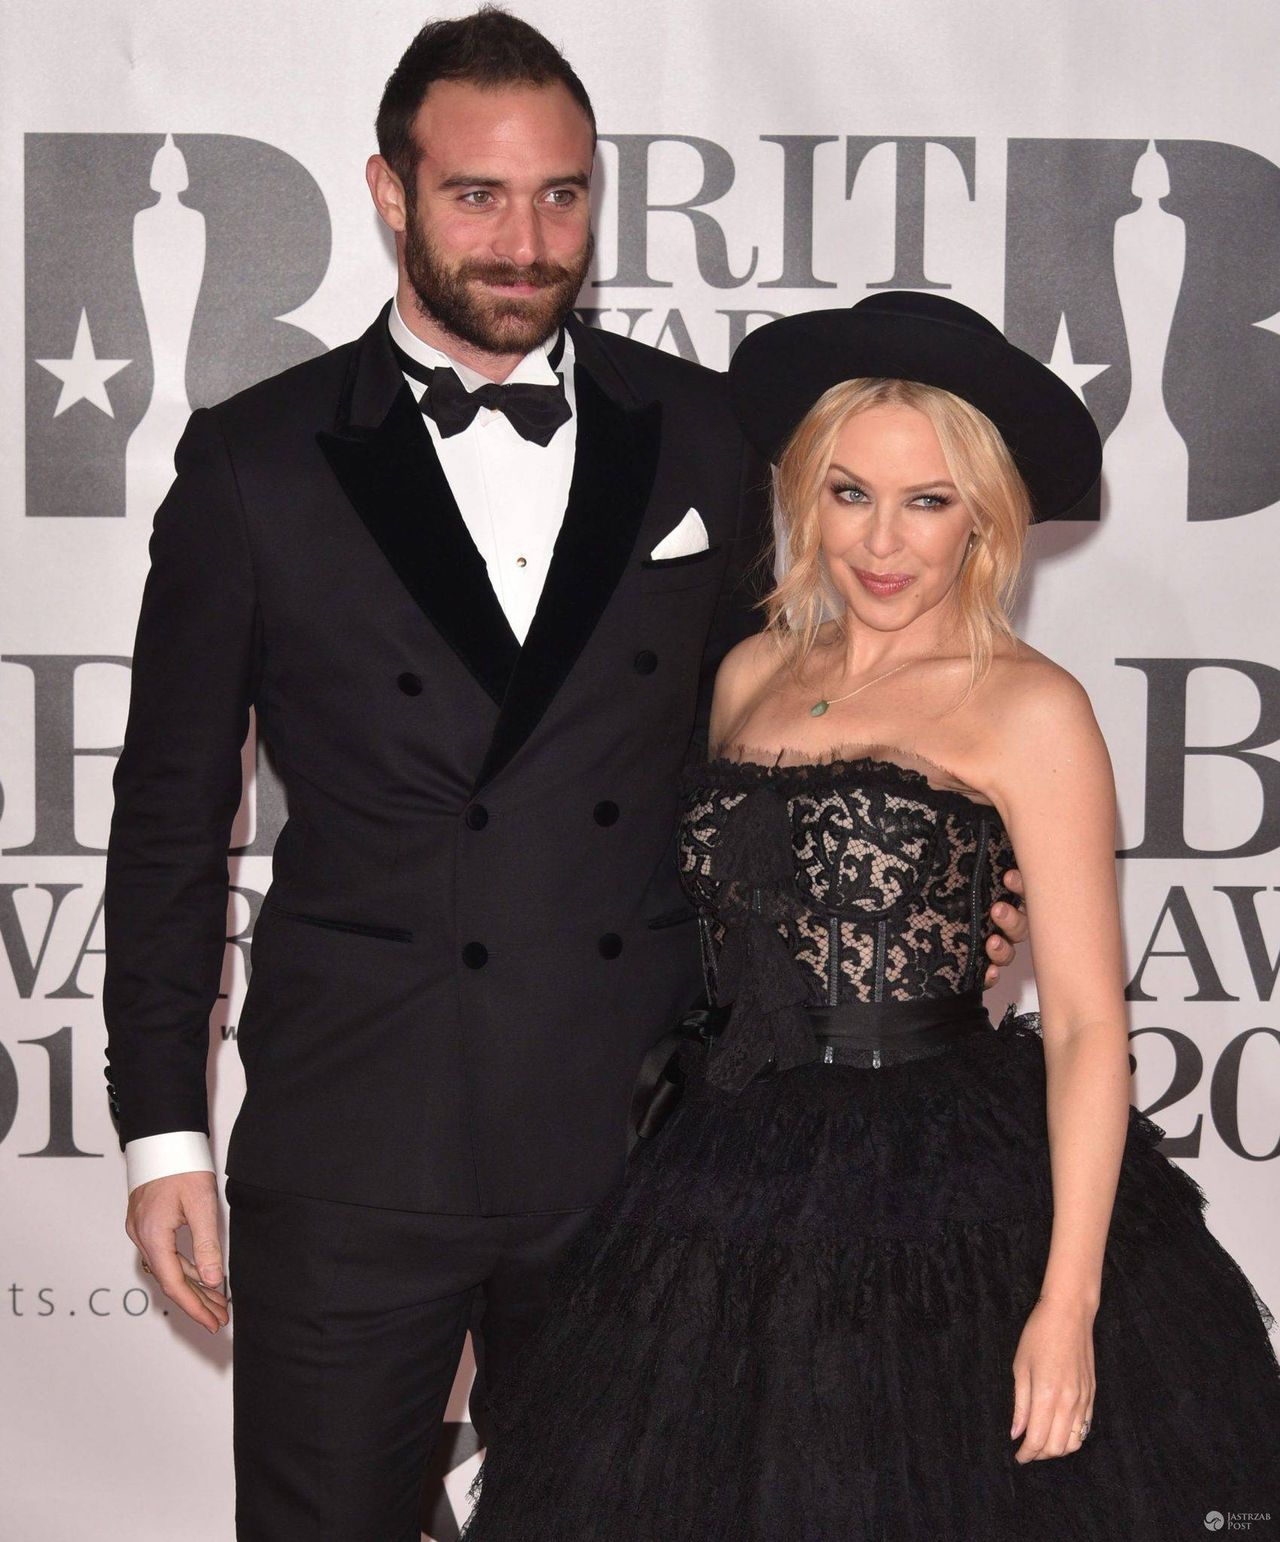 Joshua Sasse i Kylie Minogue (w sukience Dolce & Gabbana), BRIT Awards 2016 (fot. ONS)